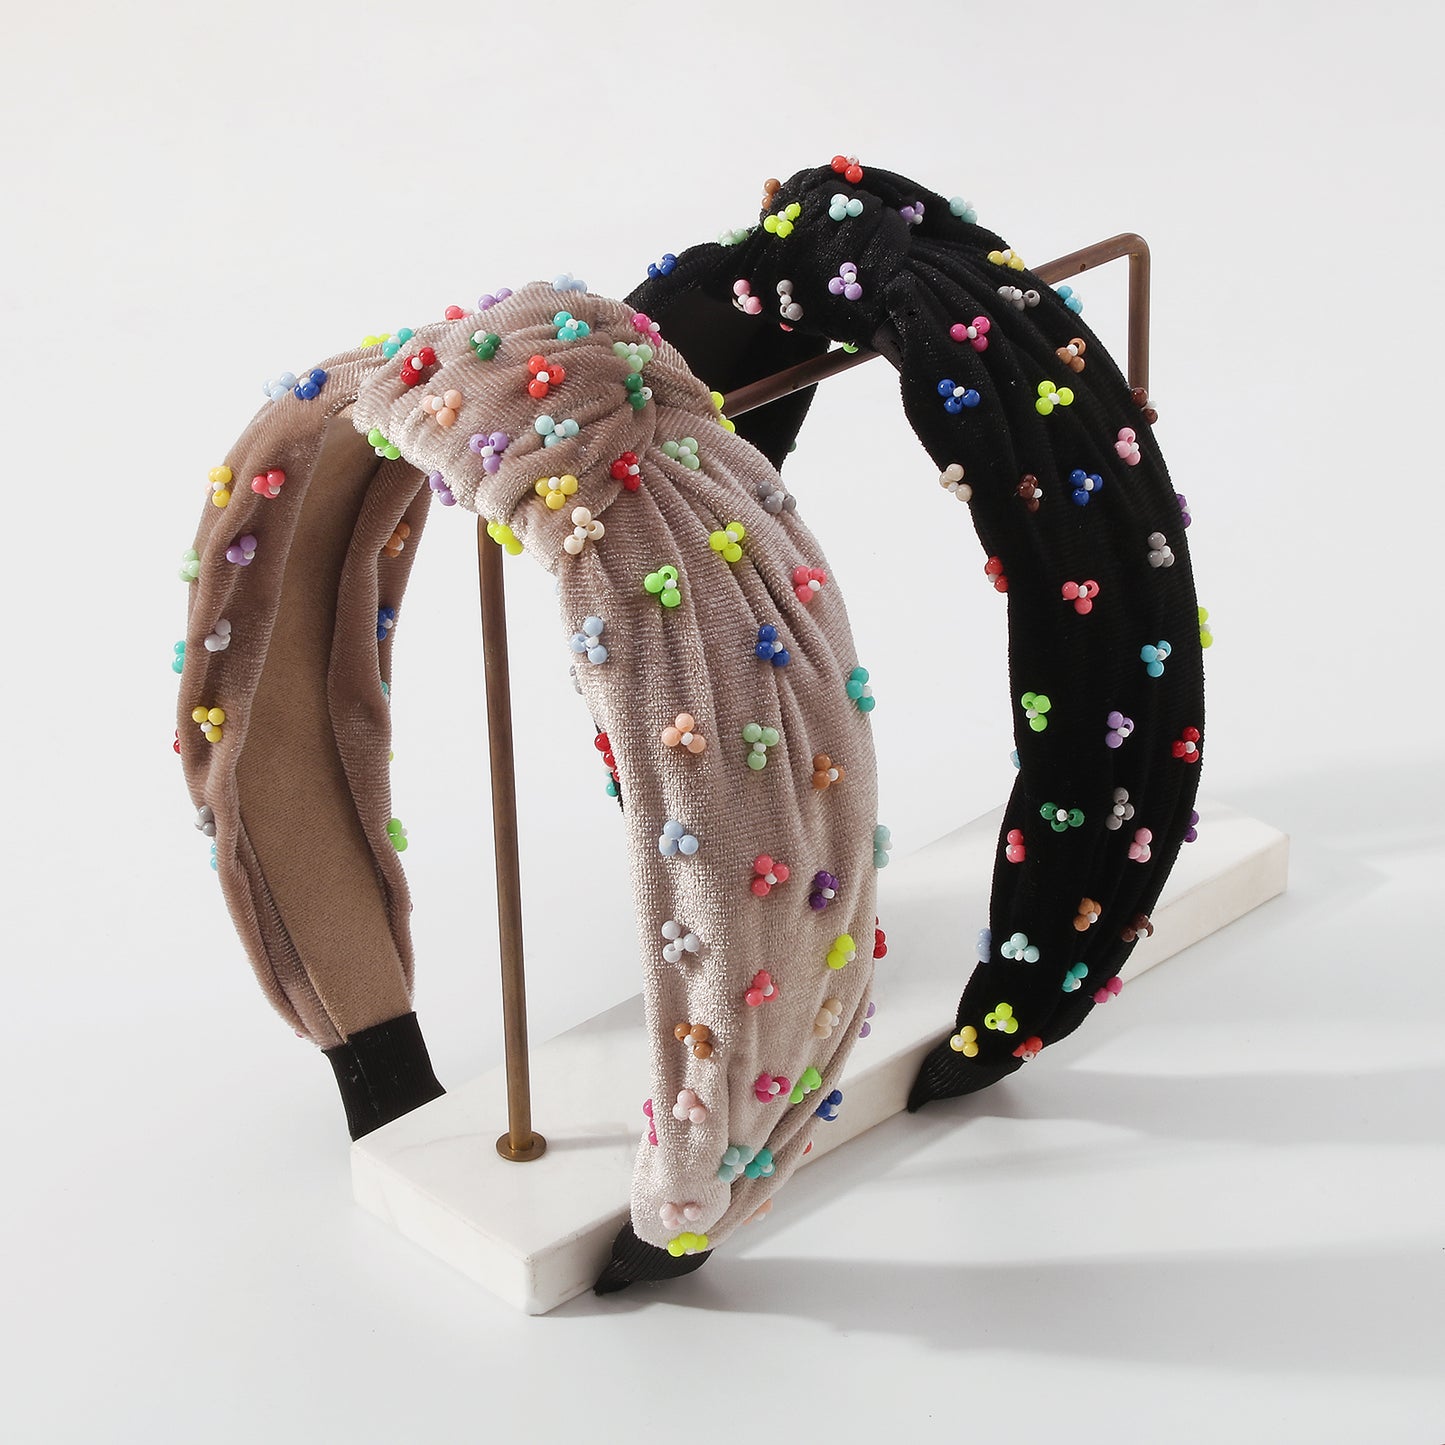 Handmade Colorful Beaded Solid Color Headband medyjewelry